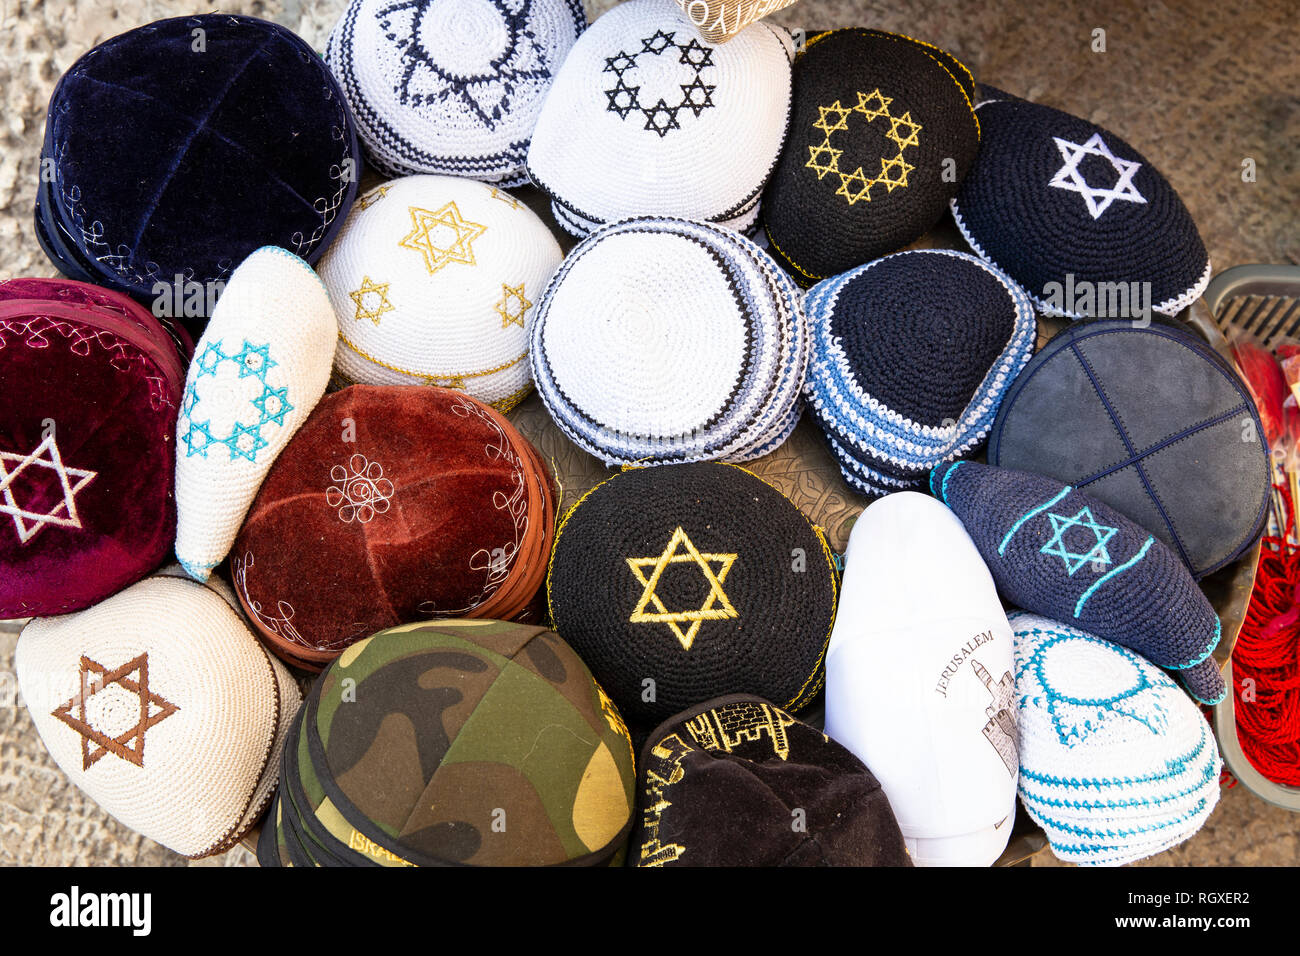 Yarmulkes, Jewish Hat Cover, Kippah with Israeli Star of David sells as a Souvenirs in Old city of Jerusalem. Jewish headwear - Image Stock Photo